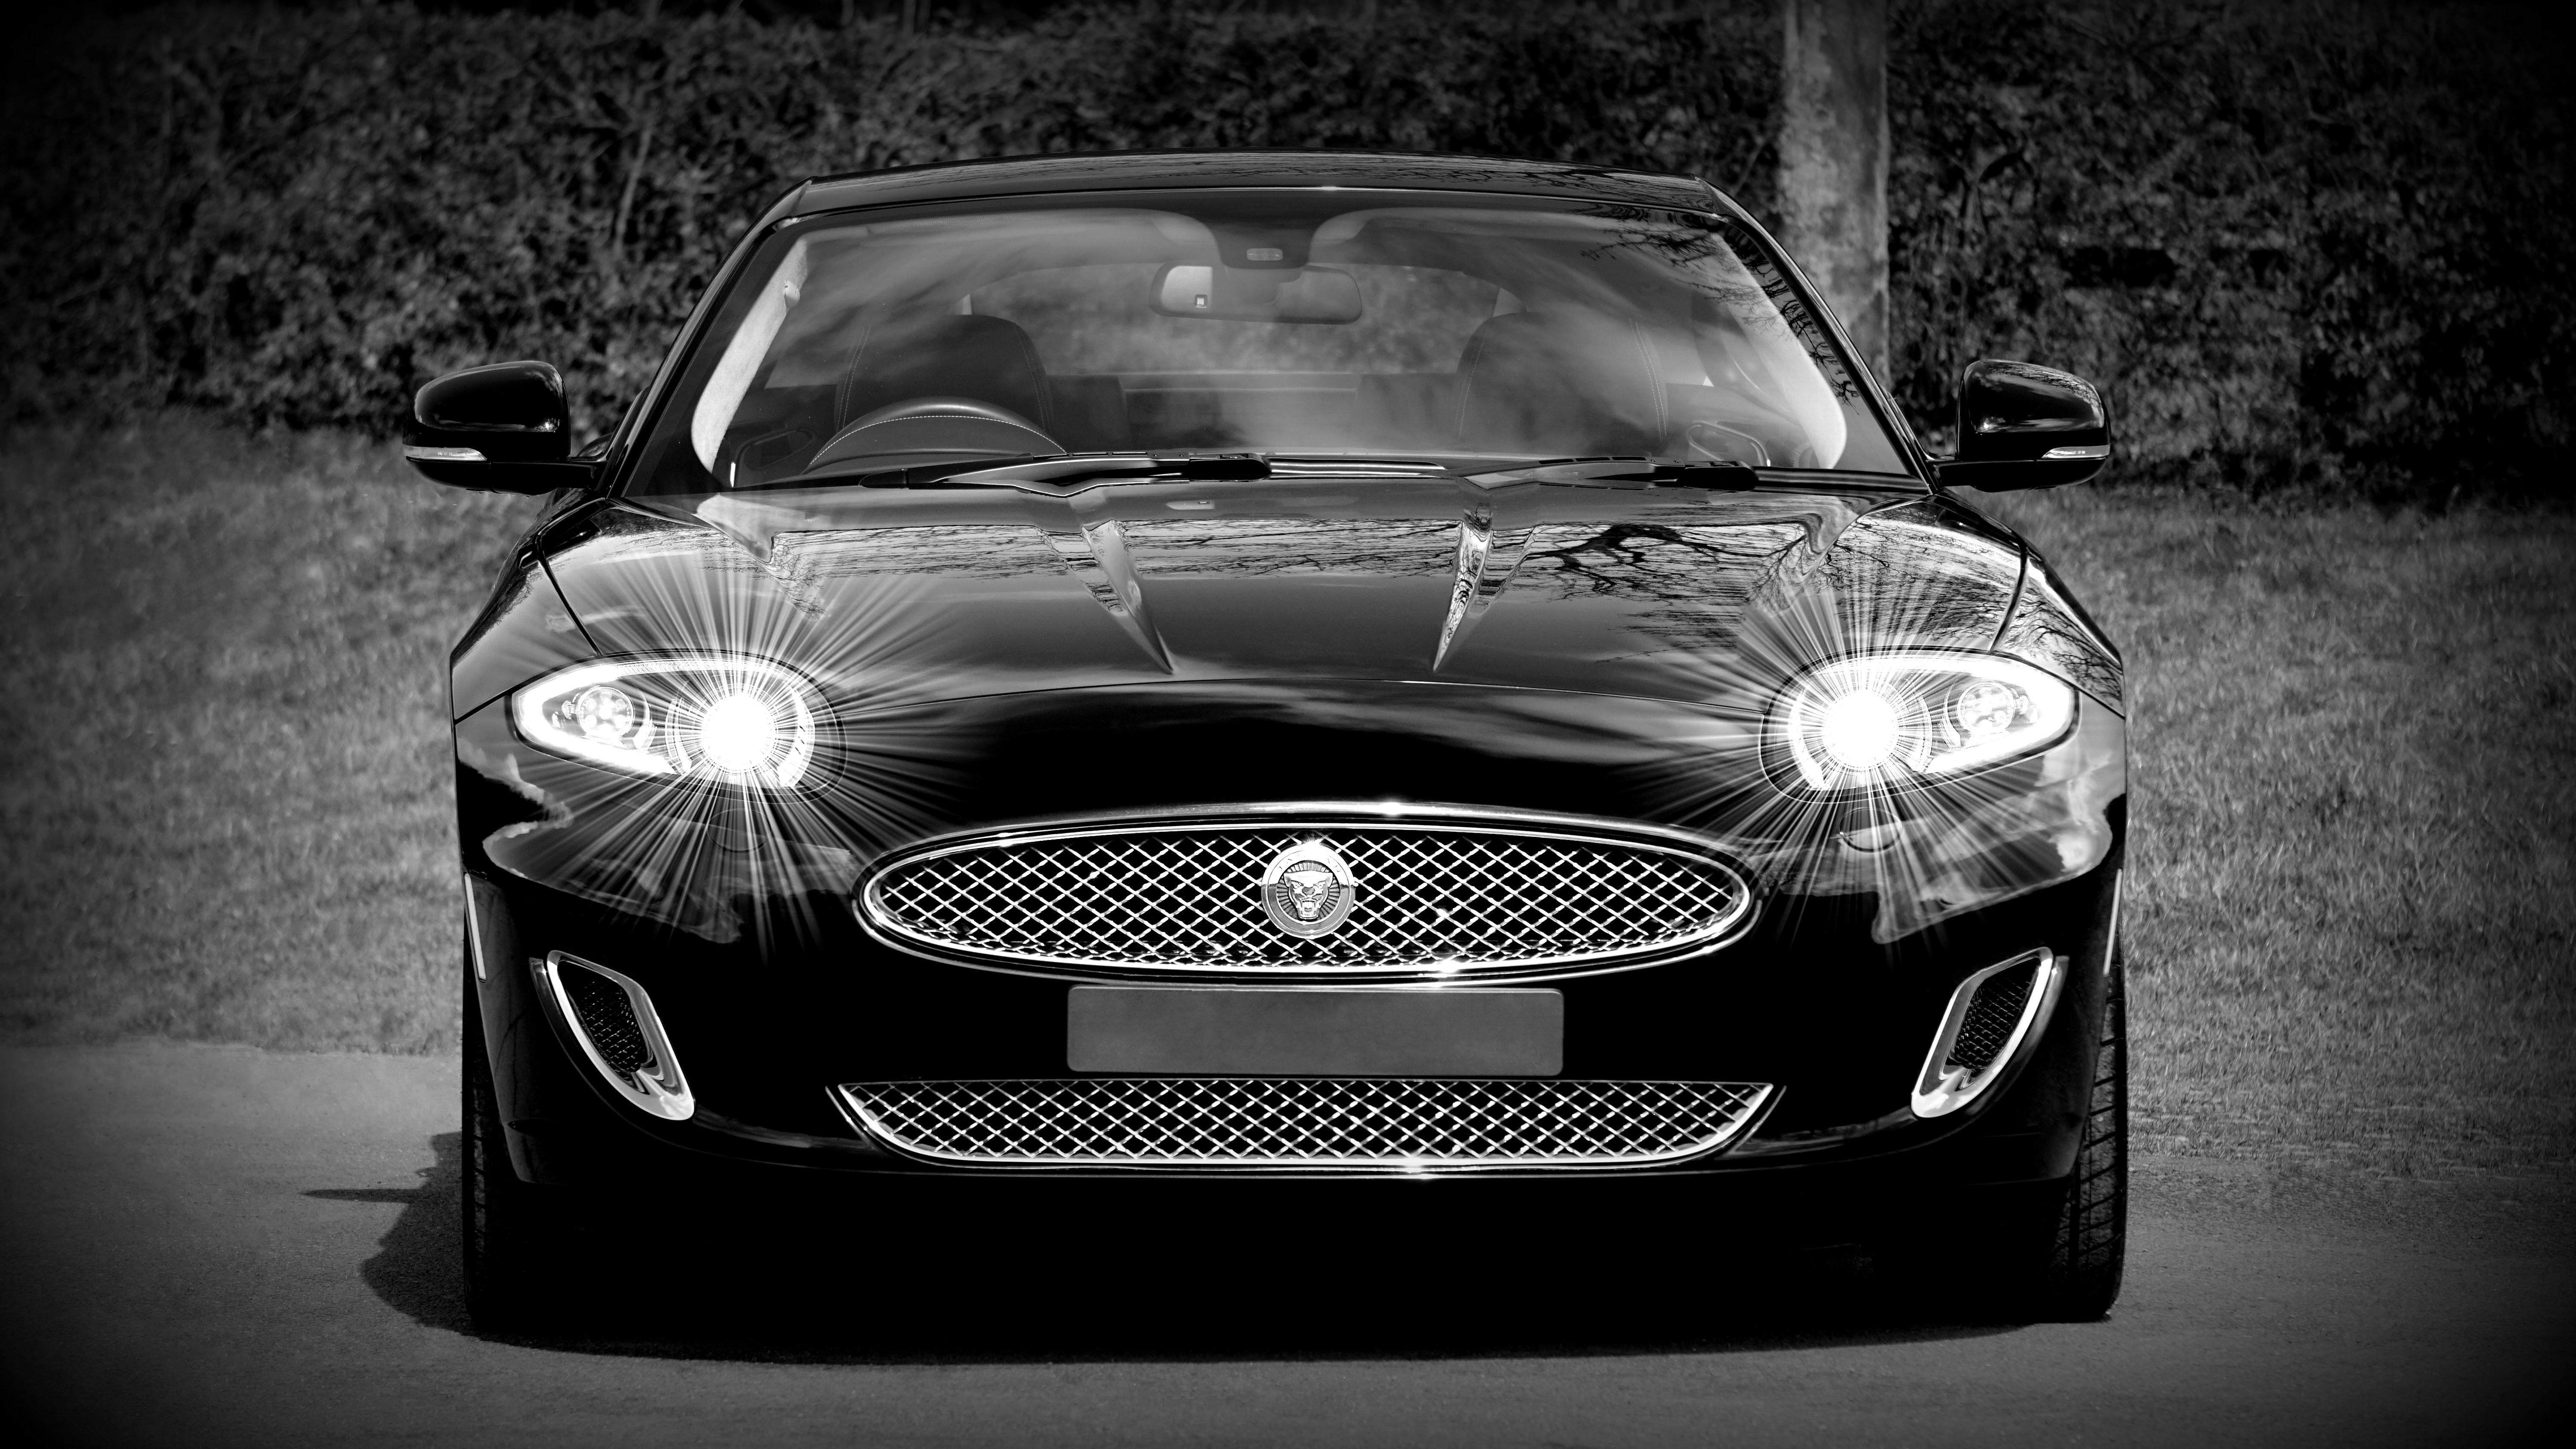 100+] Jaguar Car Wallpapers | Wallpapers.com